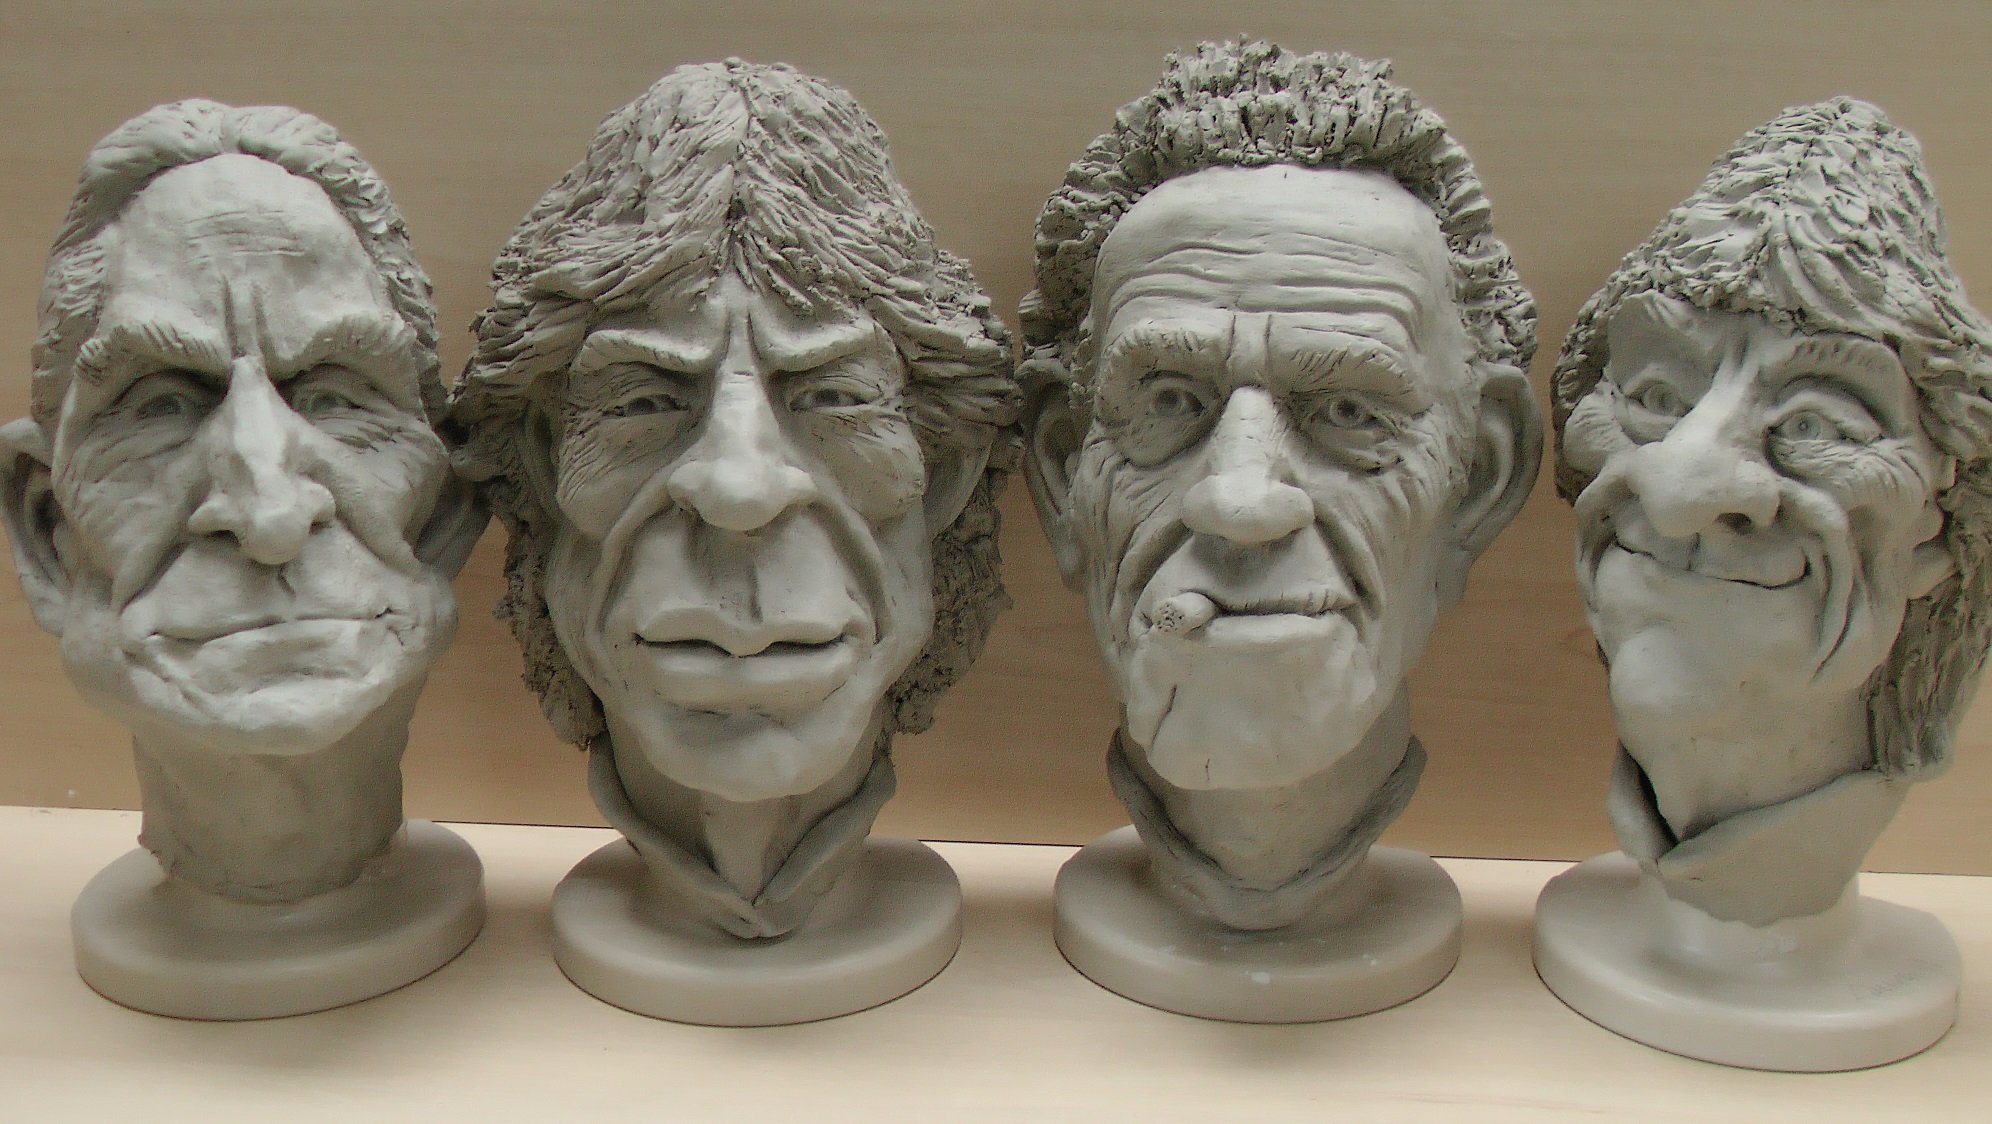 Sculpt a human face in clay